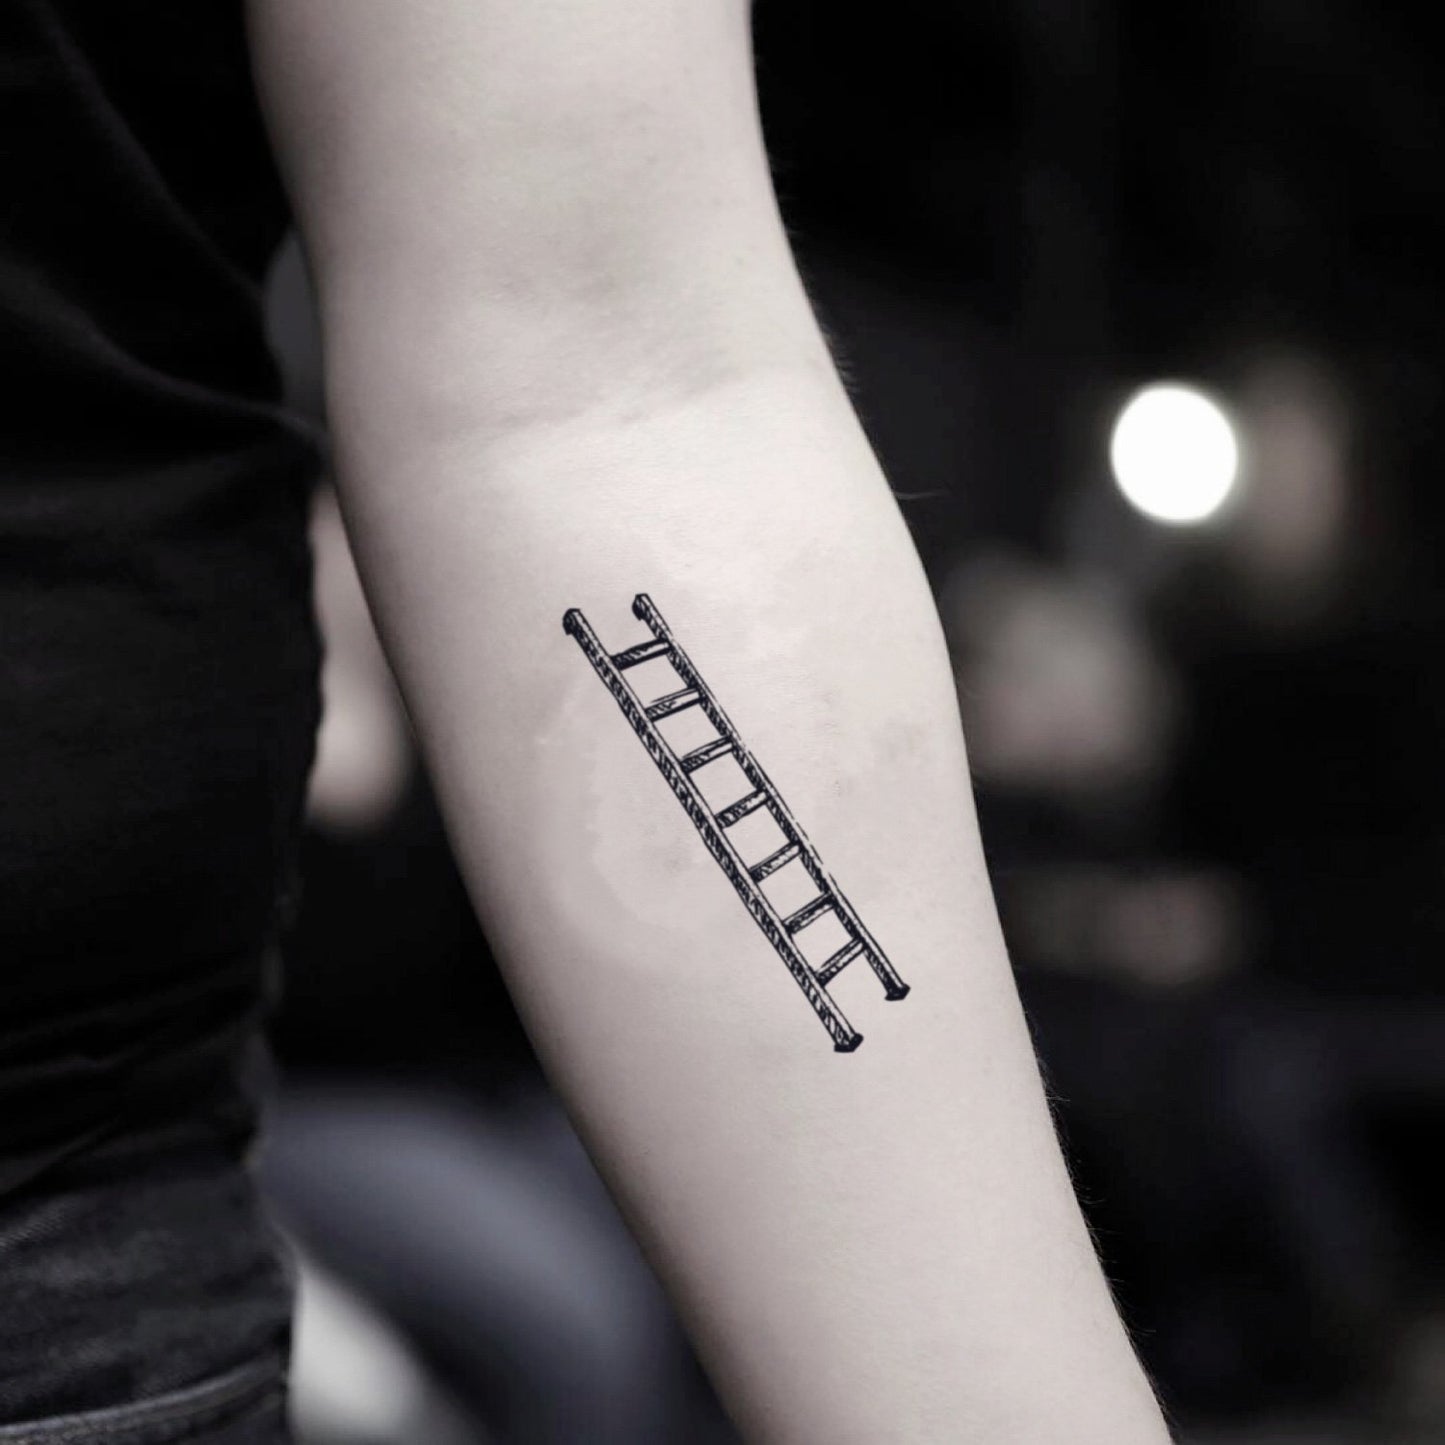 fake small jacob's ladder minimalist temporary tattoo sticker design idea on inner arm